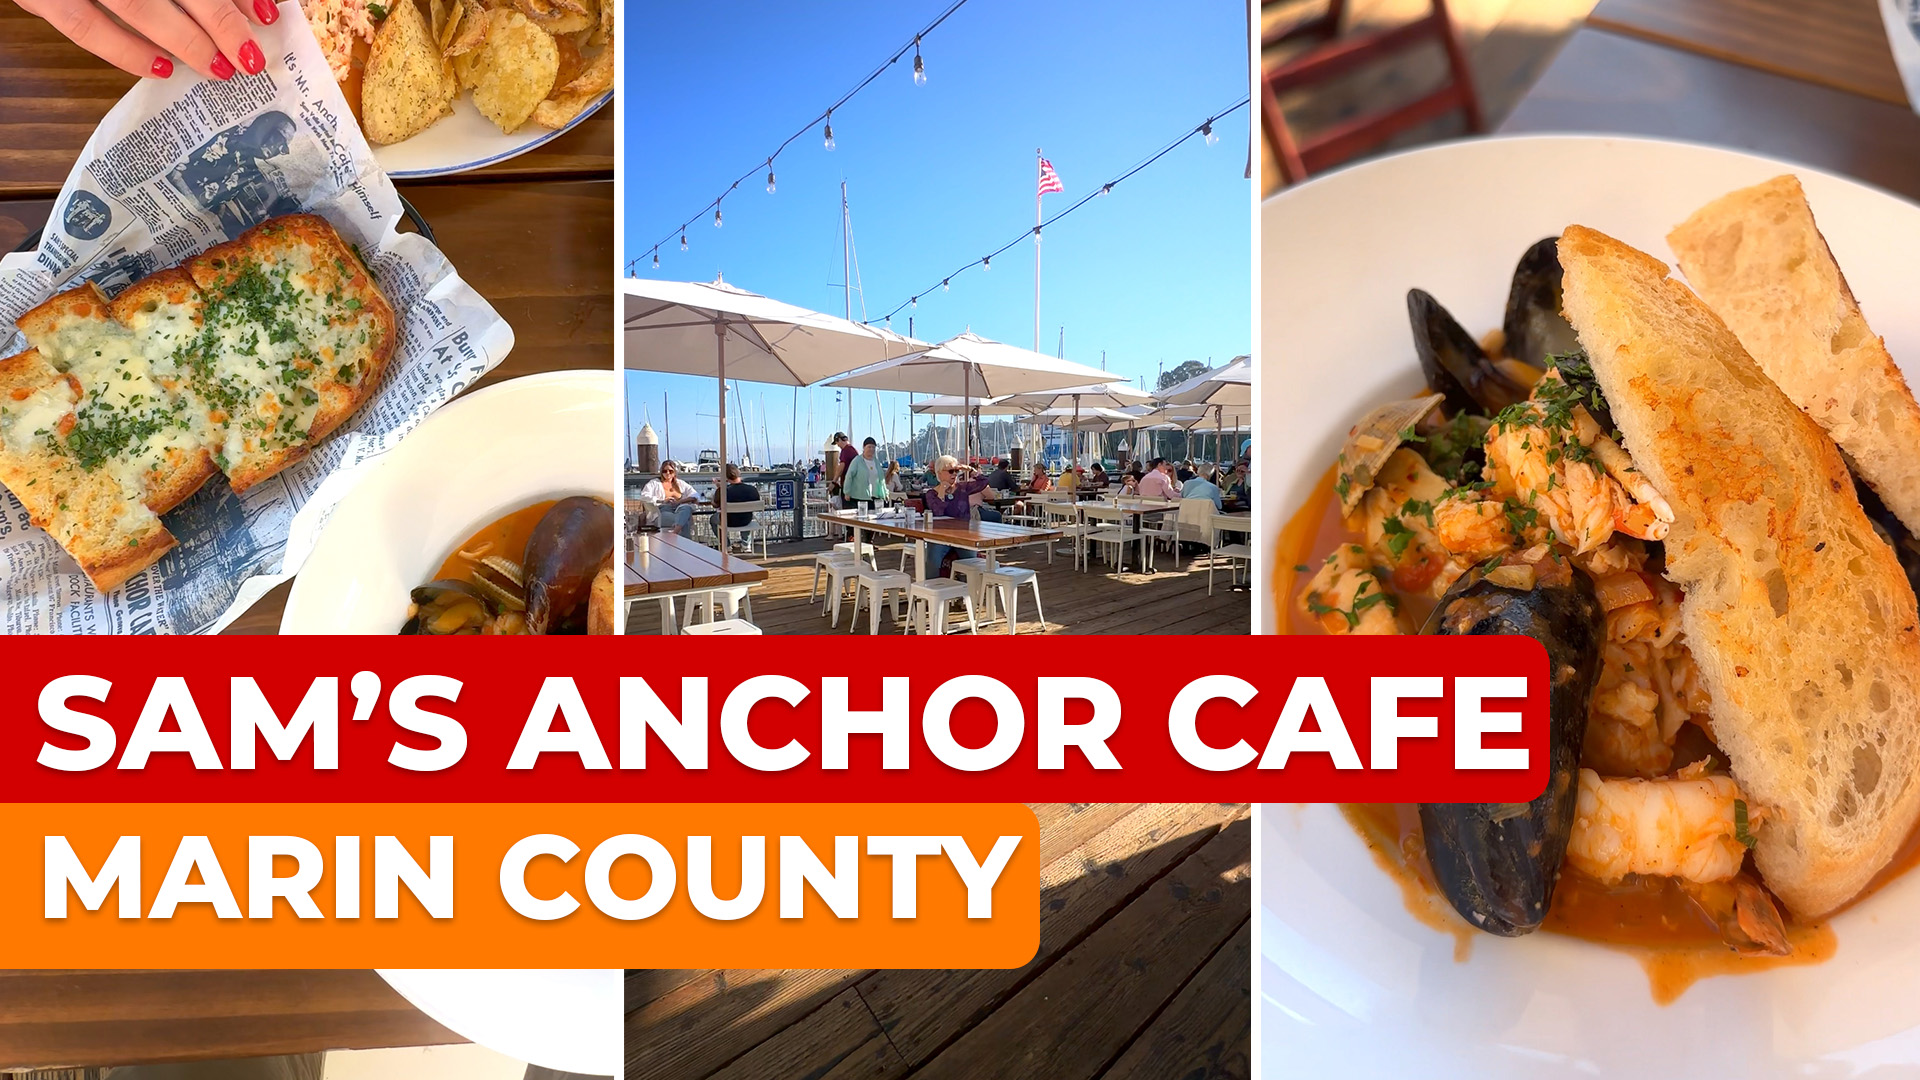 Sam's Anchor Cafe in Tiburon